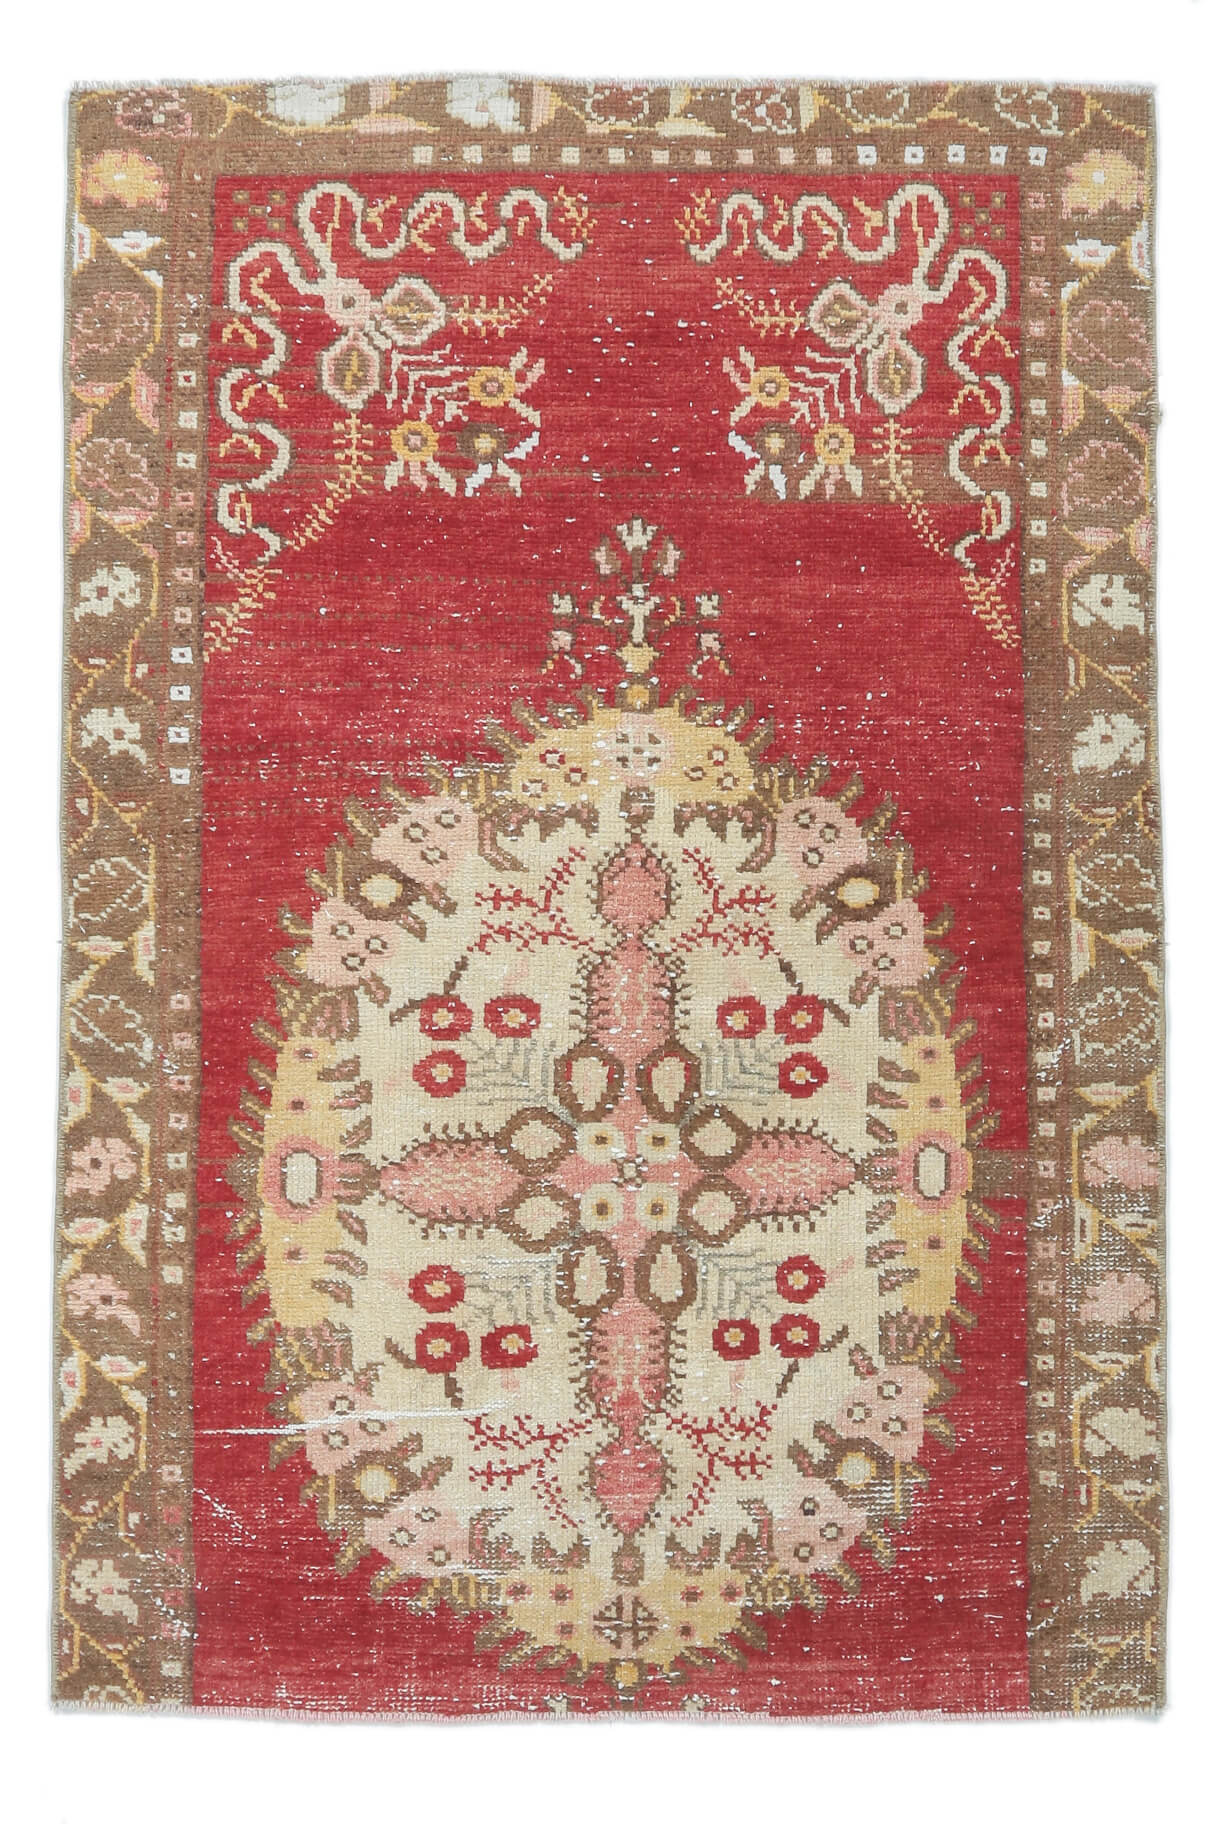 https://www.rugser.com/3x4-vintage-handmade-red-beige-small-rug-rugser-turkish-rug-bathroom-73661-22-B.jpg